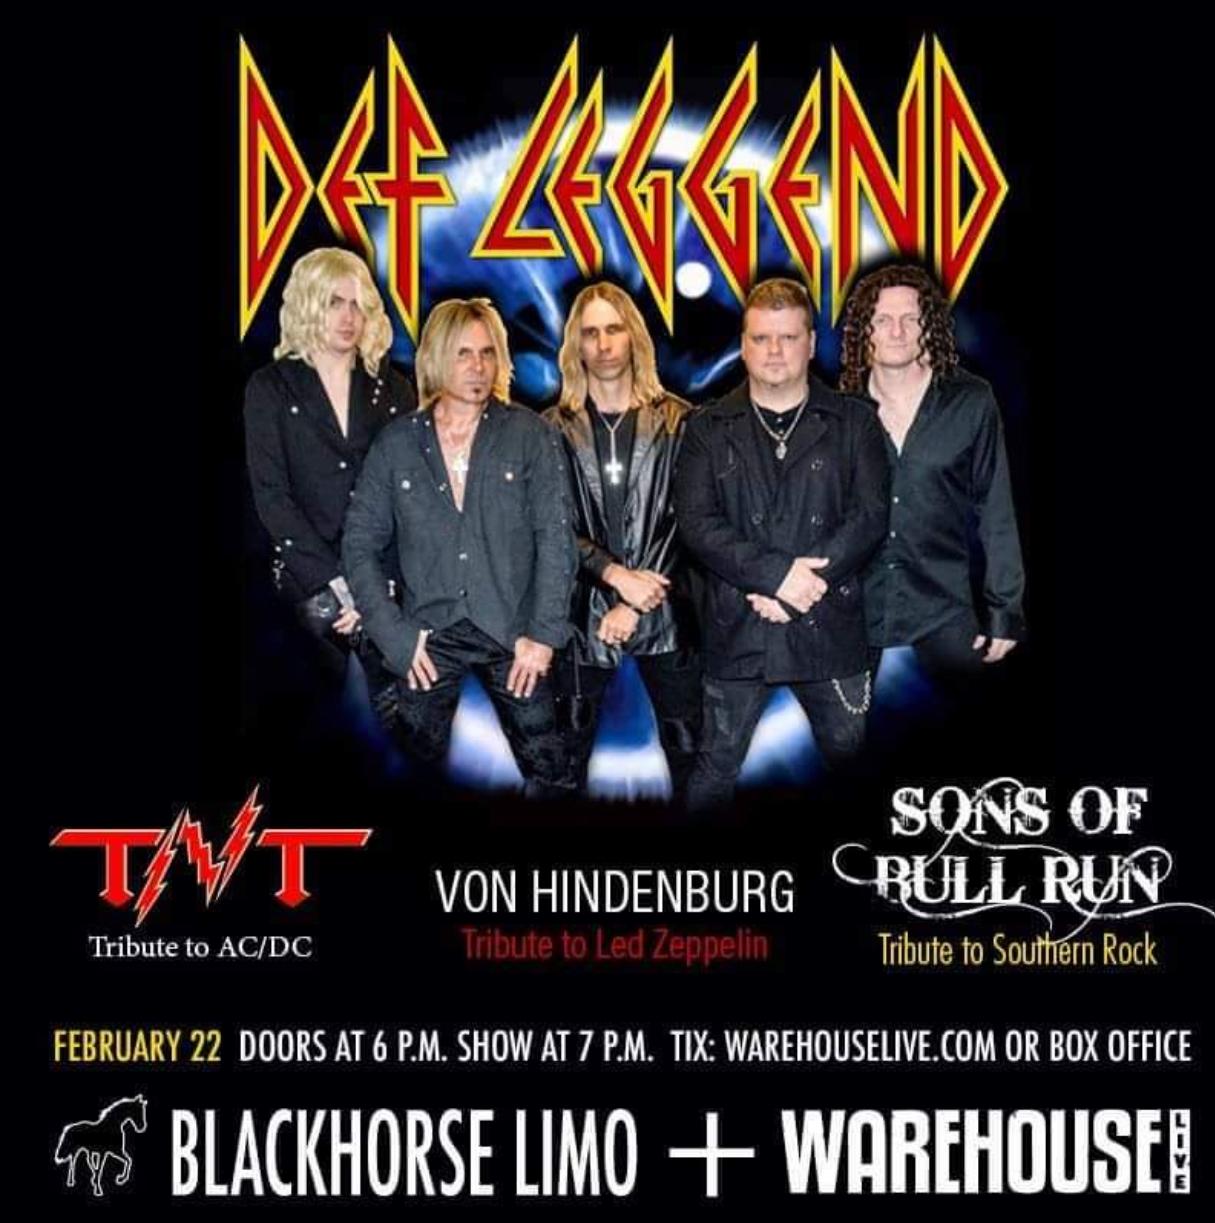 Def Leggend, TNT, Von Hindenburg, and Sons of Bull Run Concert at Warehouse